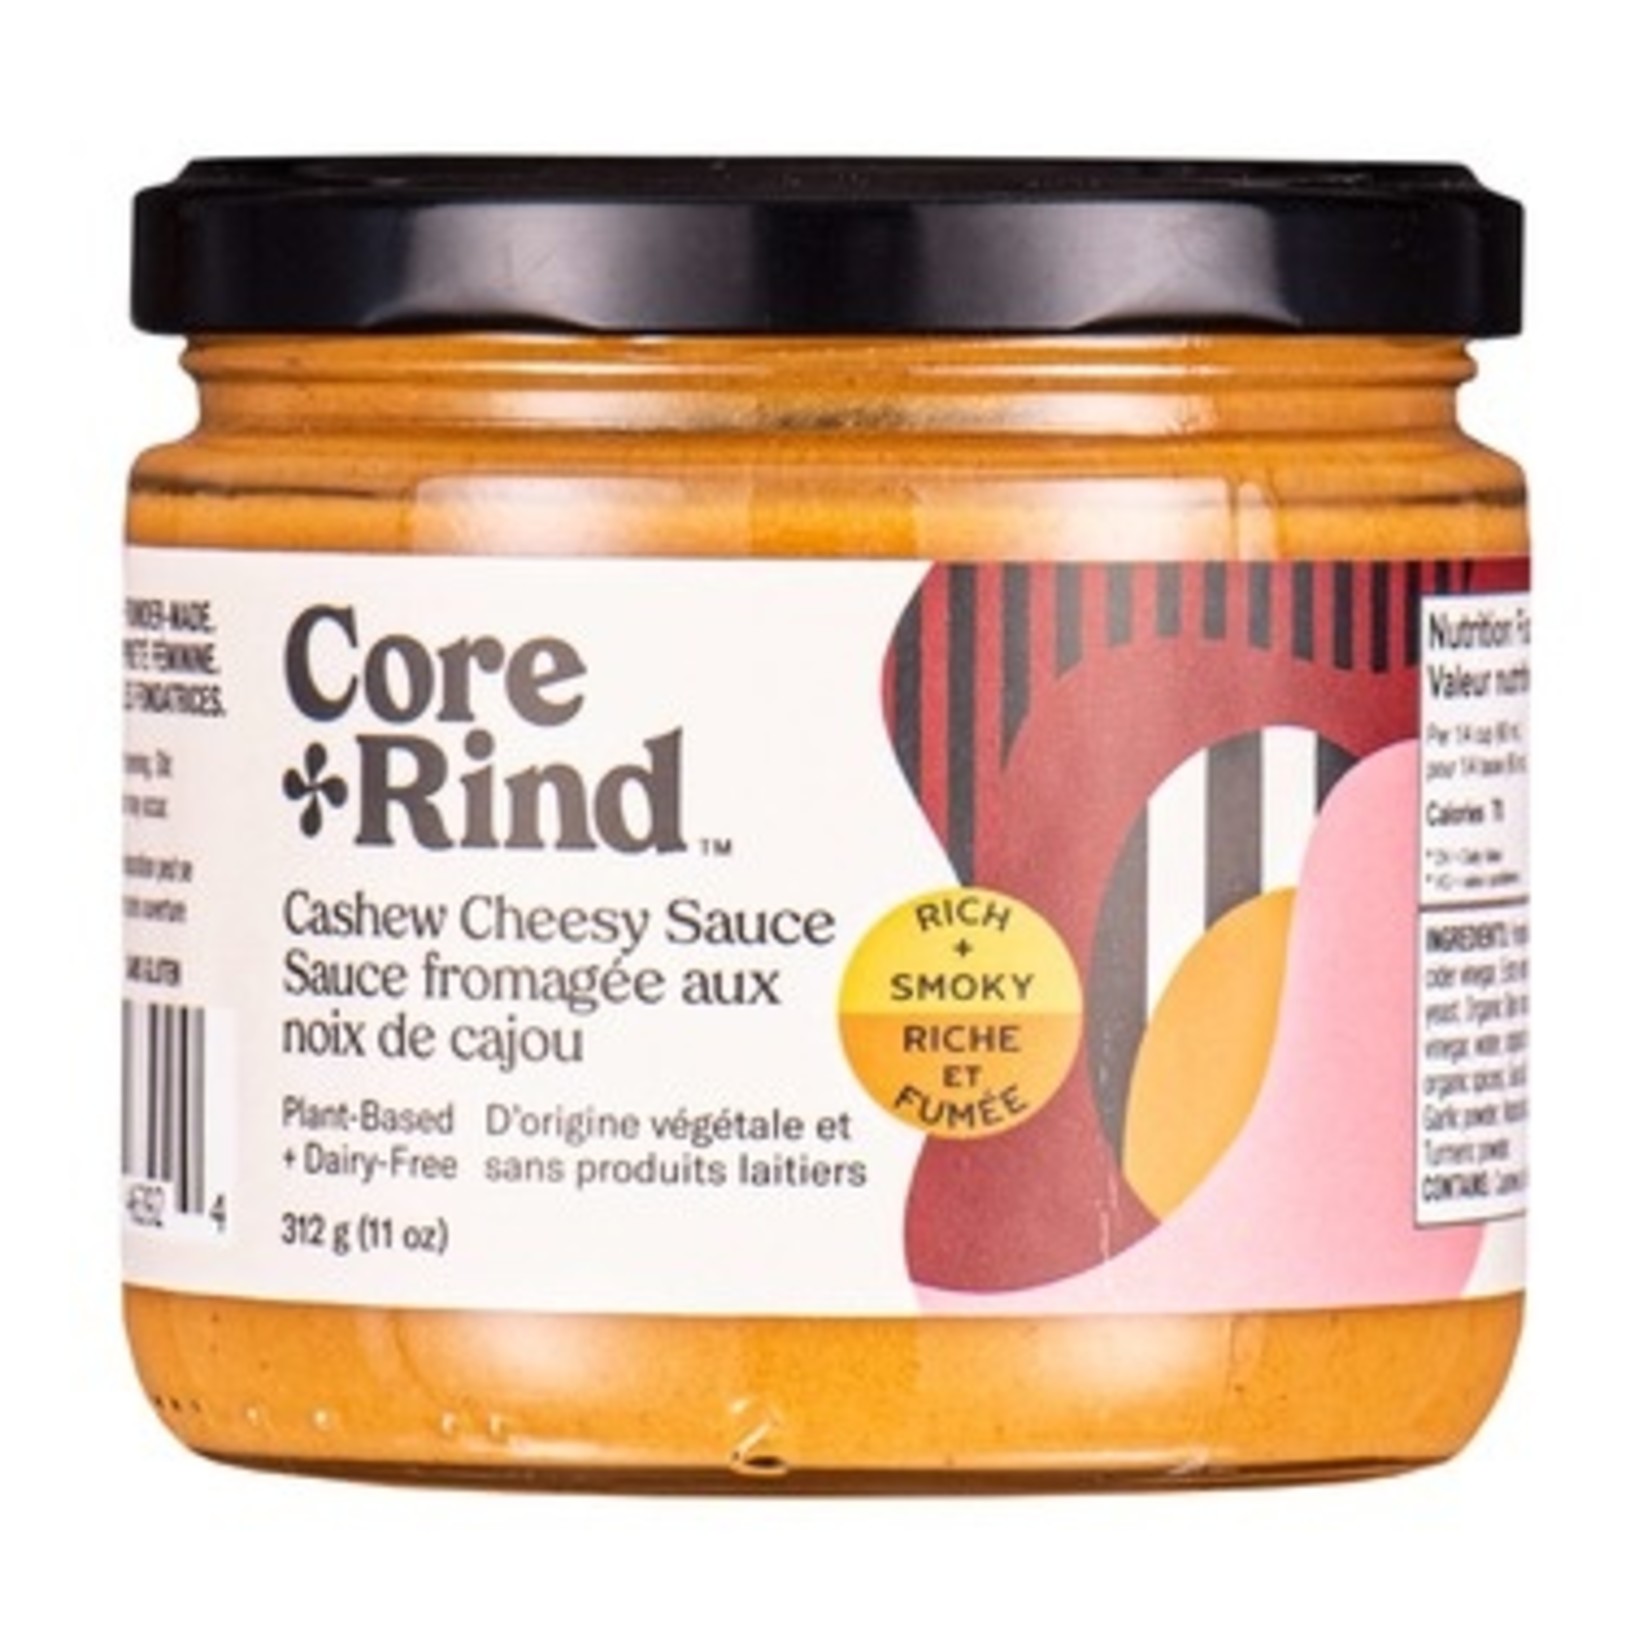 Core & Rind Core & Rind - Cashew Cheesy Sauce, Rich & Smoky (312g)